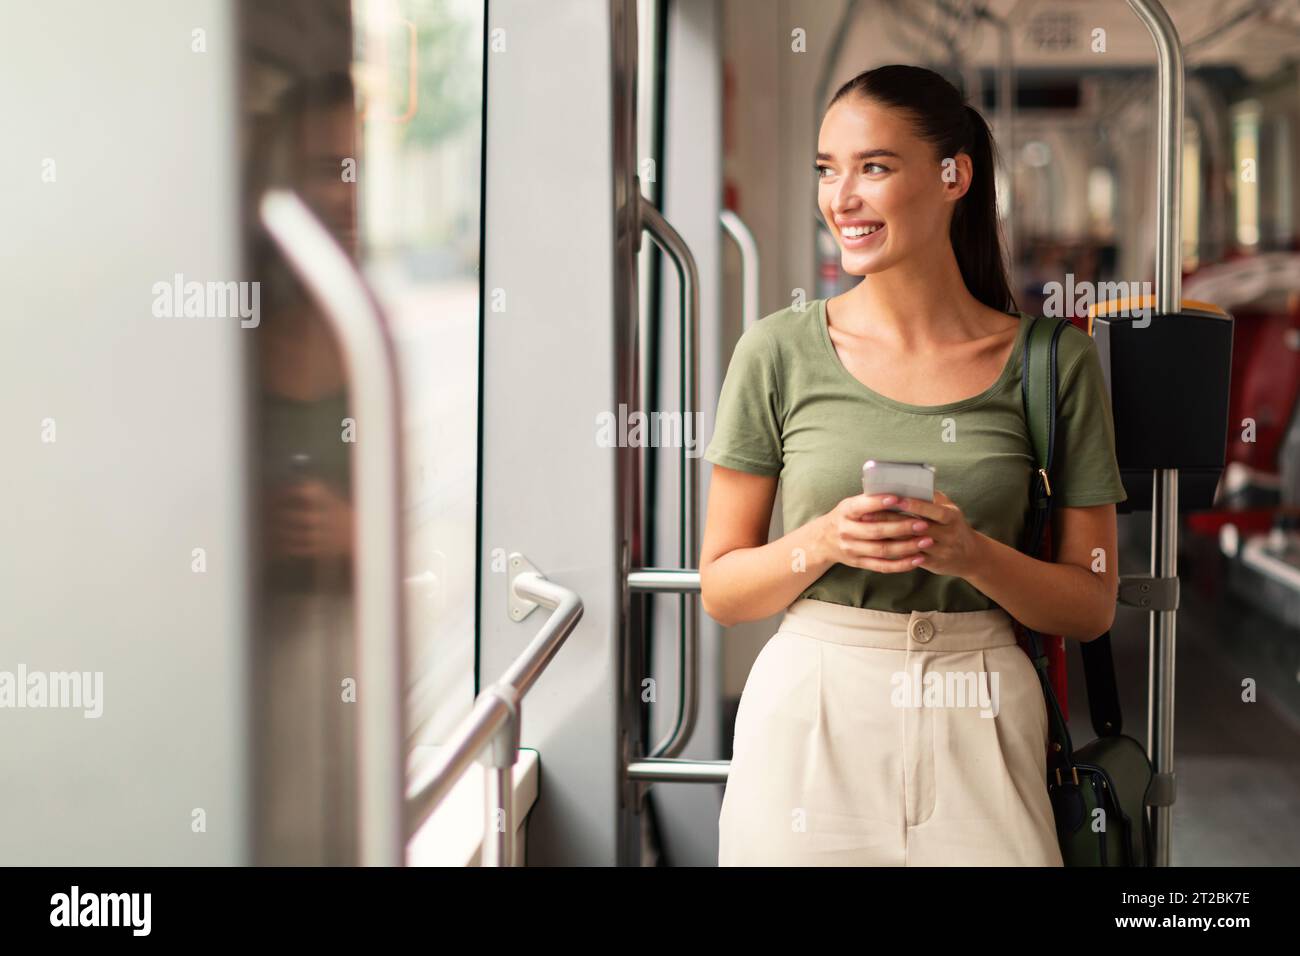 Passenger woman browsing on phone in tram indoor Stock Photo